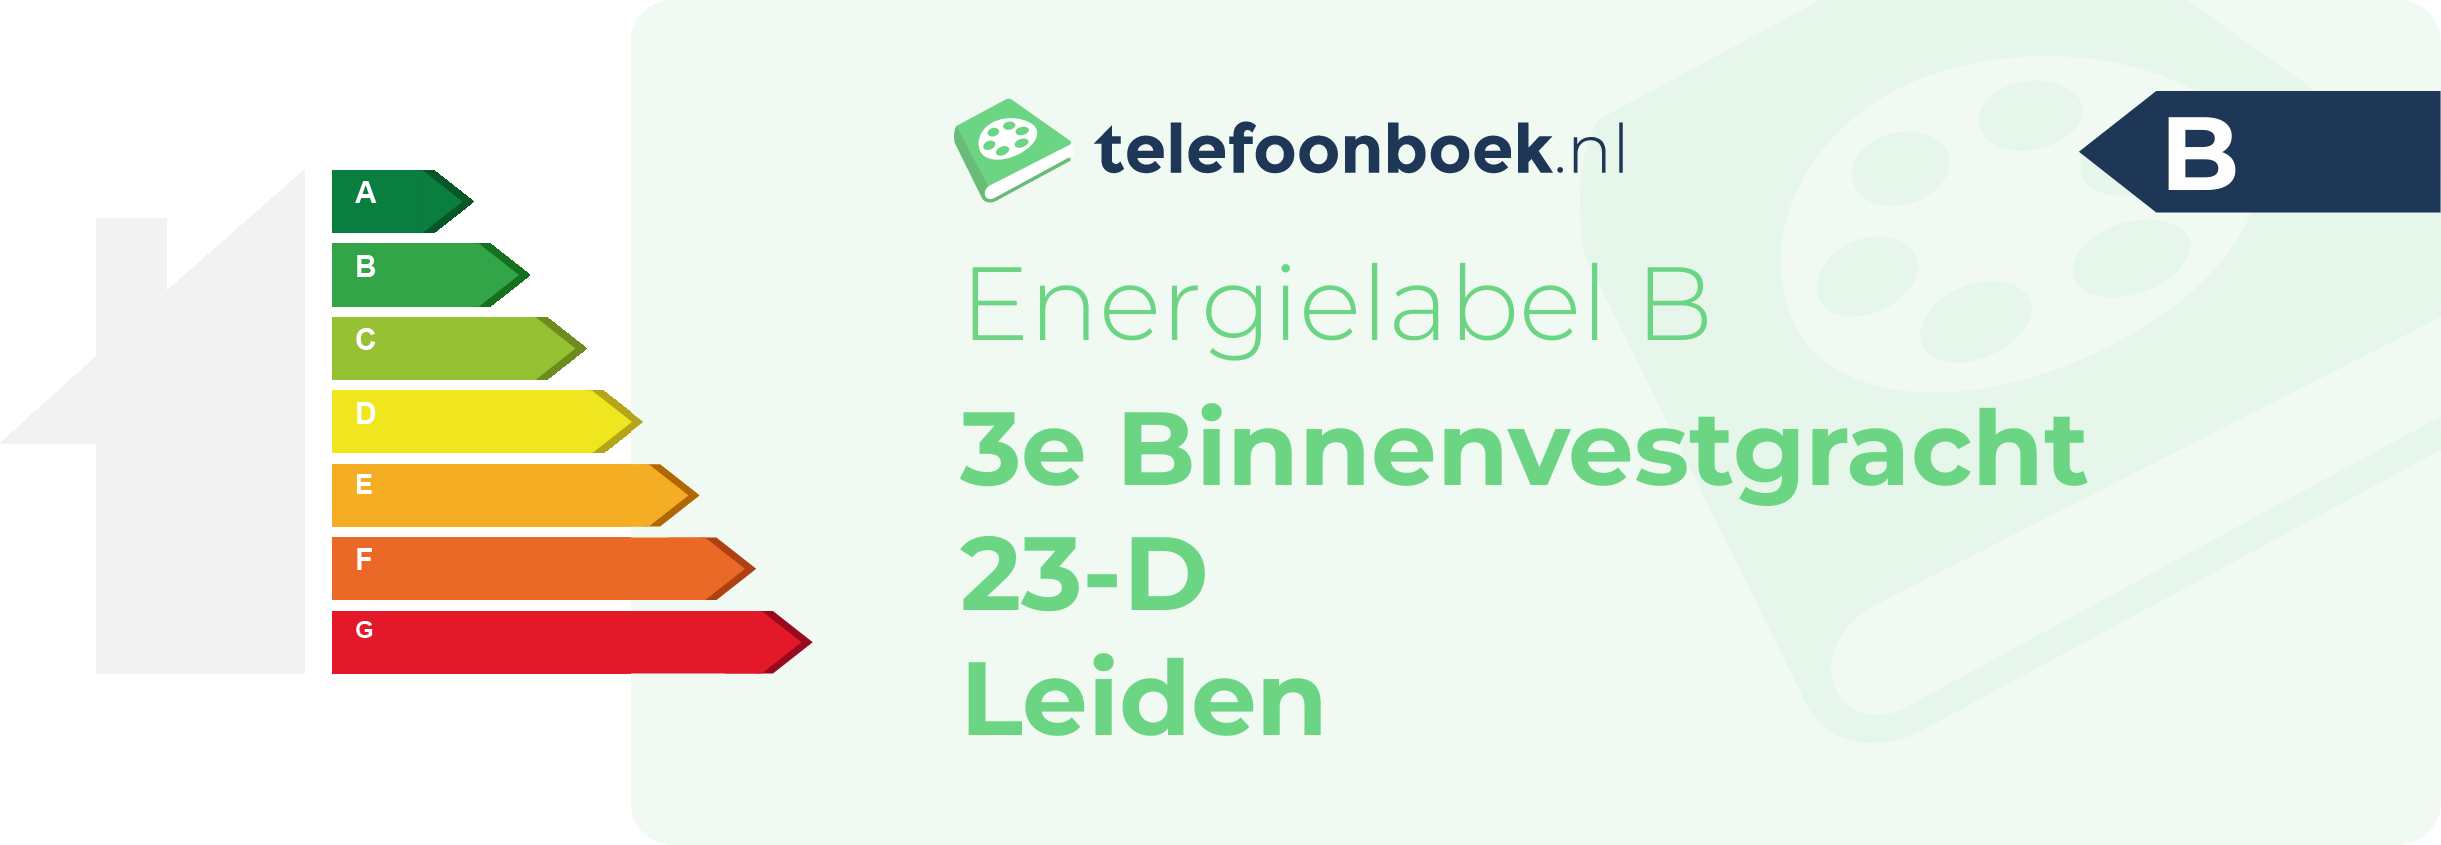 Energielabel 3e Binnenvestgracht 23-D Leiden